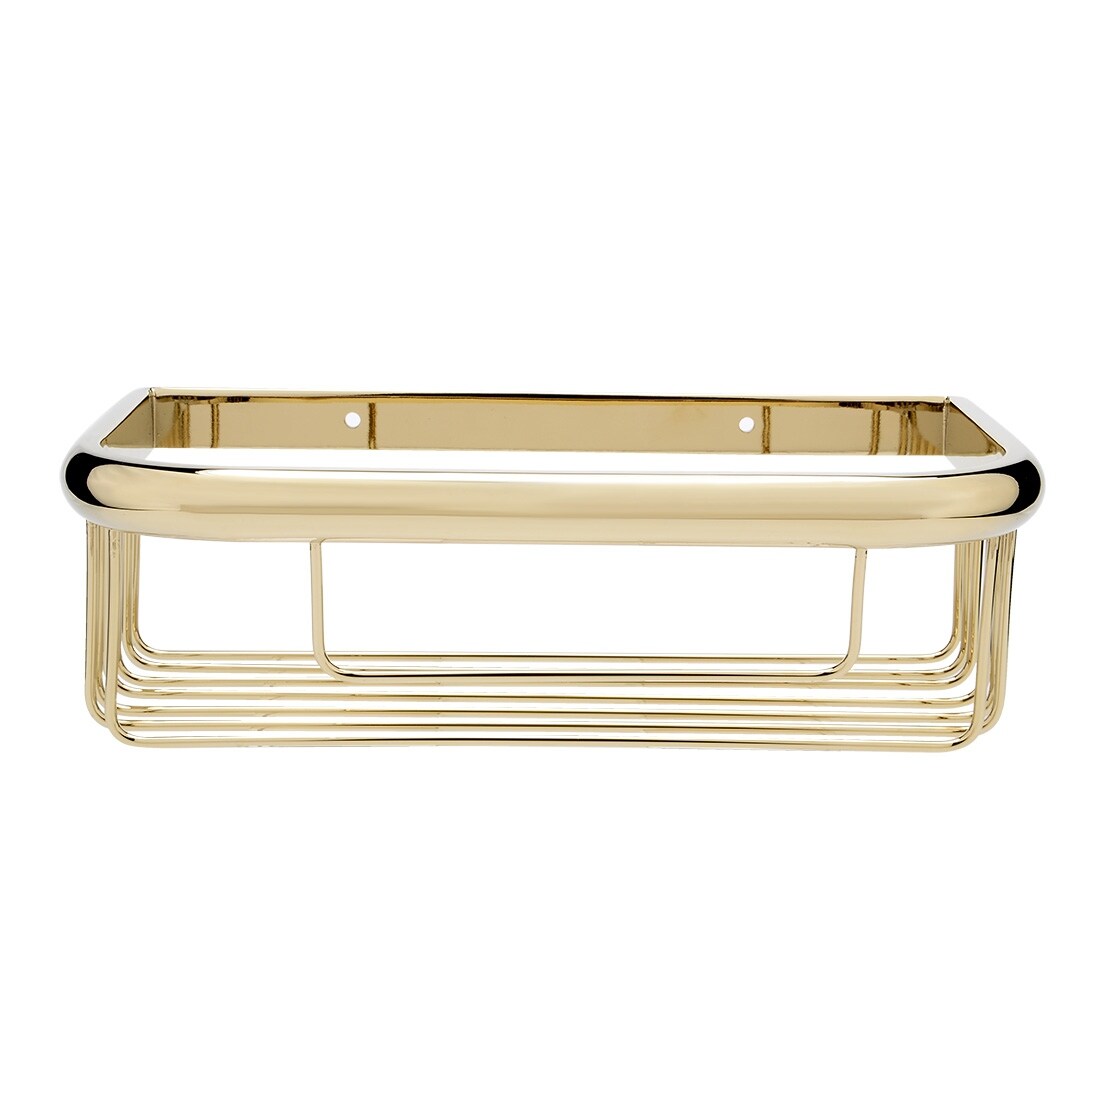 https://ak1.ostkcdn.com/images/products/is/images/direct/6af7e4723dcdd2803561955524b40ffdfce7db2d/10-inch-Brass-Wall-Mount-Rectangle-Shape-Bathroom-Shower-Caddy-Basket-Gold-Tone.jpg